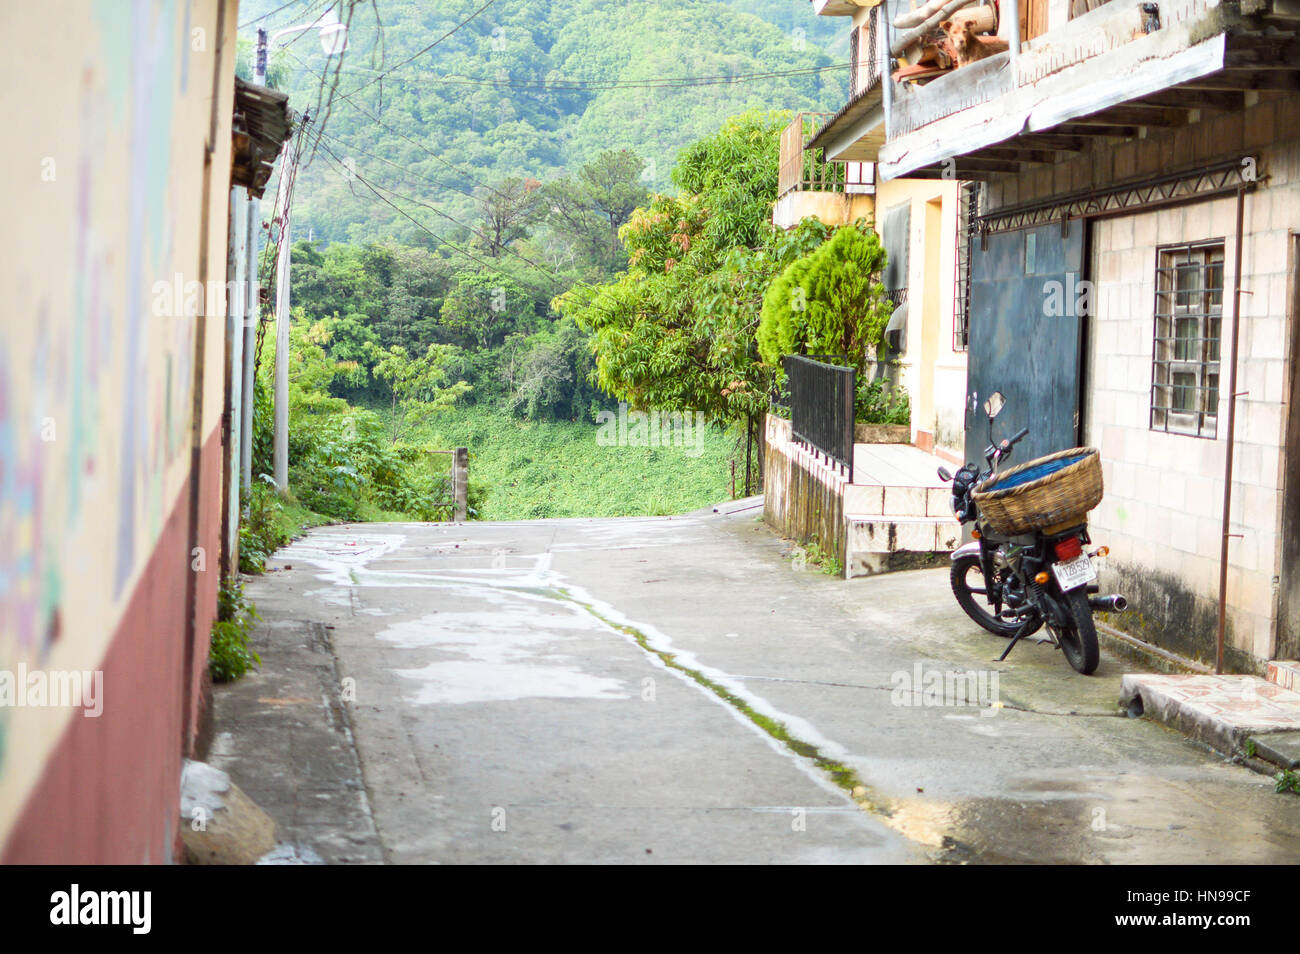 La Palma, El Salvador - 16. Mai 2015: Streetview in einer kleinen ländlichen Stadt von La Palma in El Salvador, Mittelamerika Stockfoto